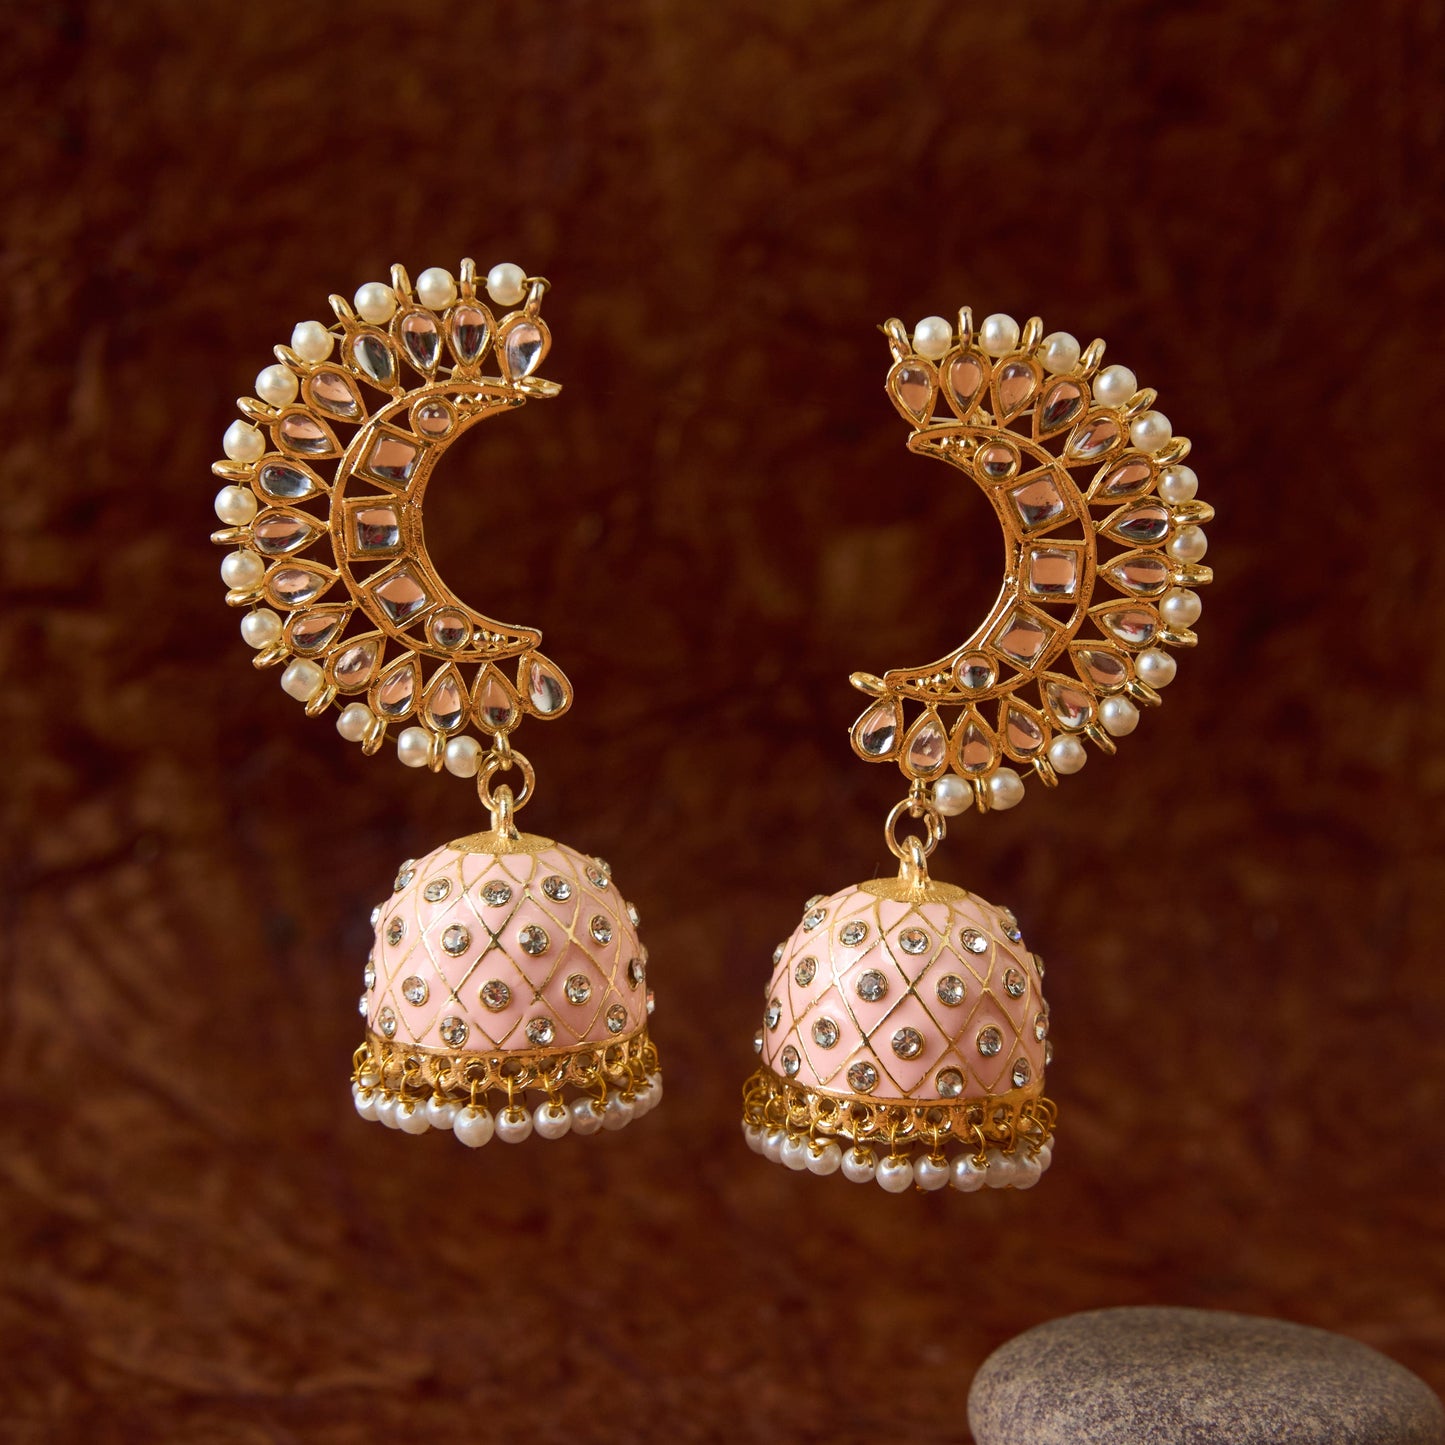 Moonstruck Traditional Inidian Golden Meenakari Jhumka/Jhumki Earrings With Pearls for Women (Peach) - www.MoonstruckINC.com